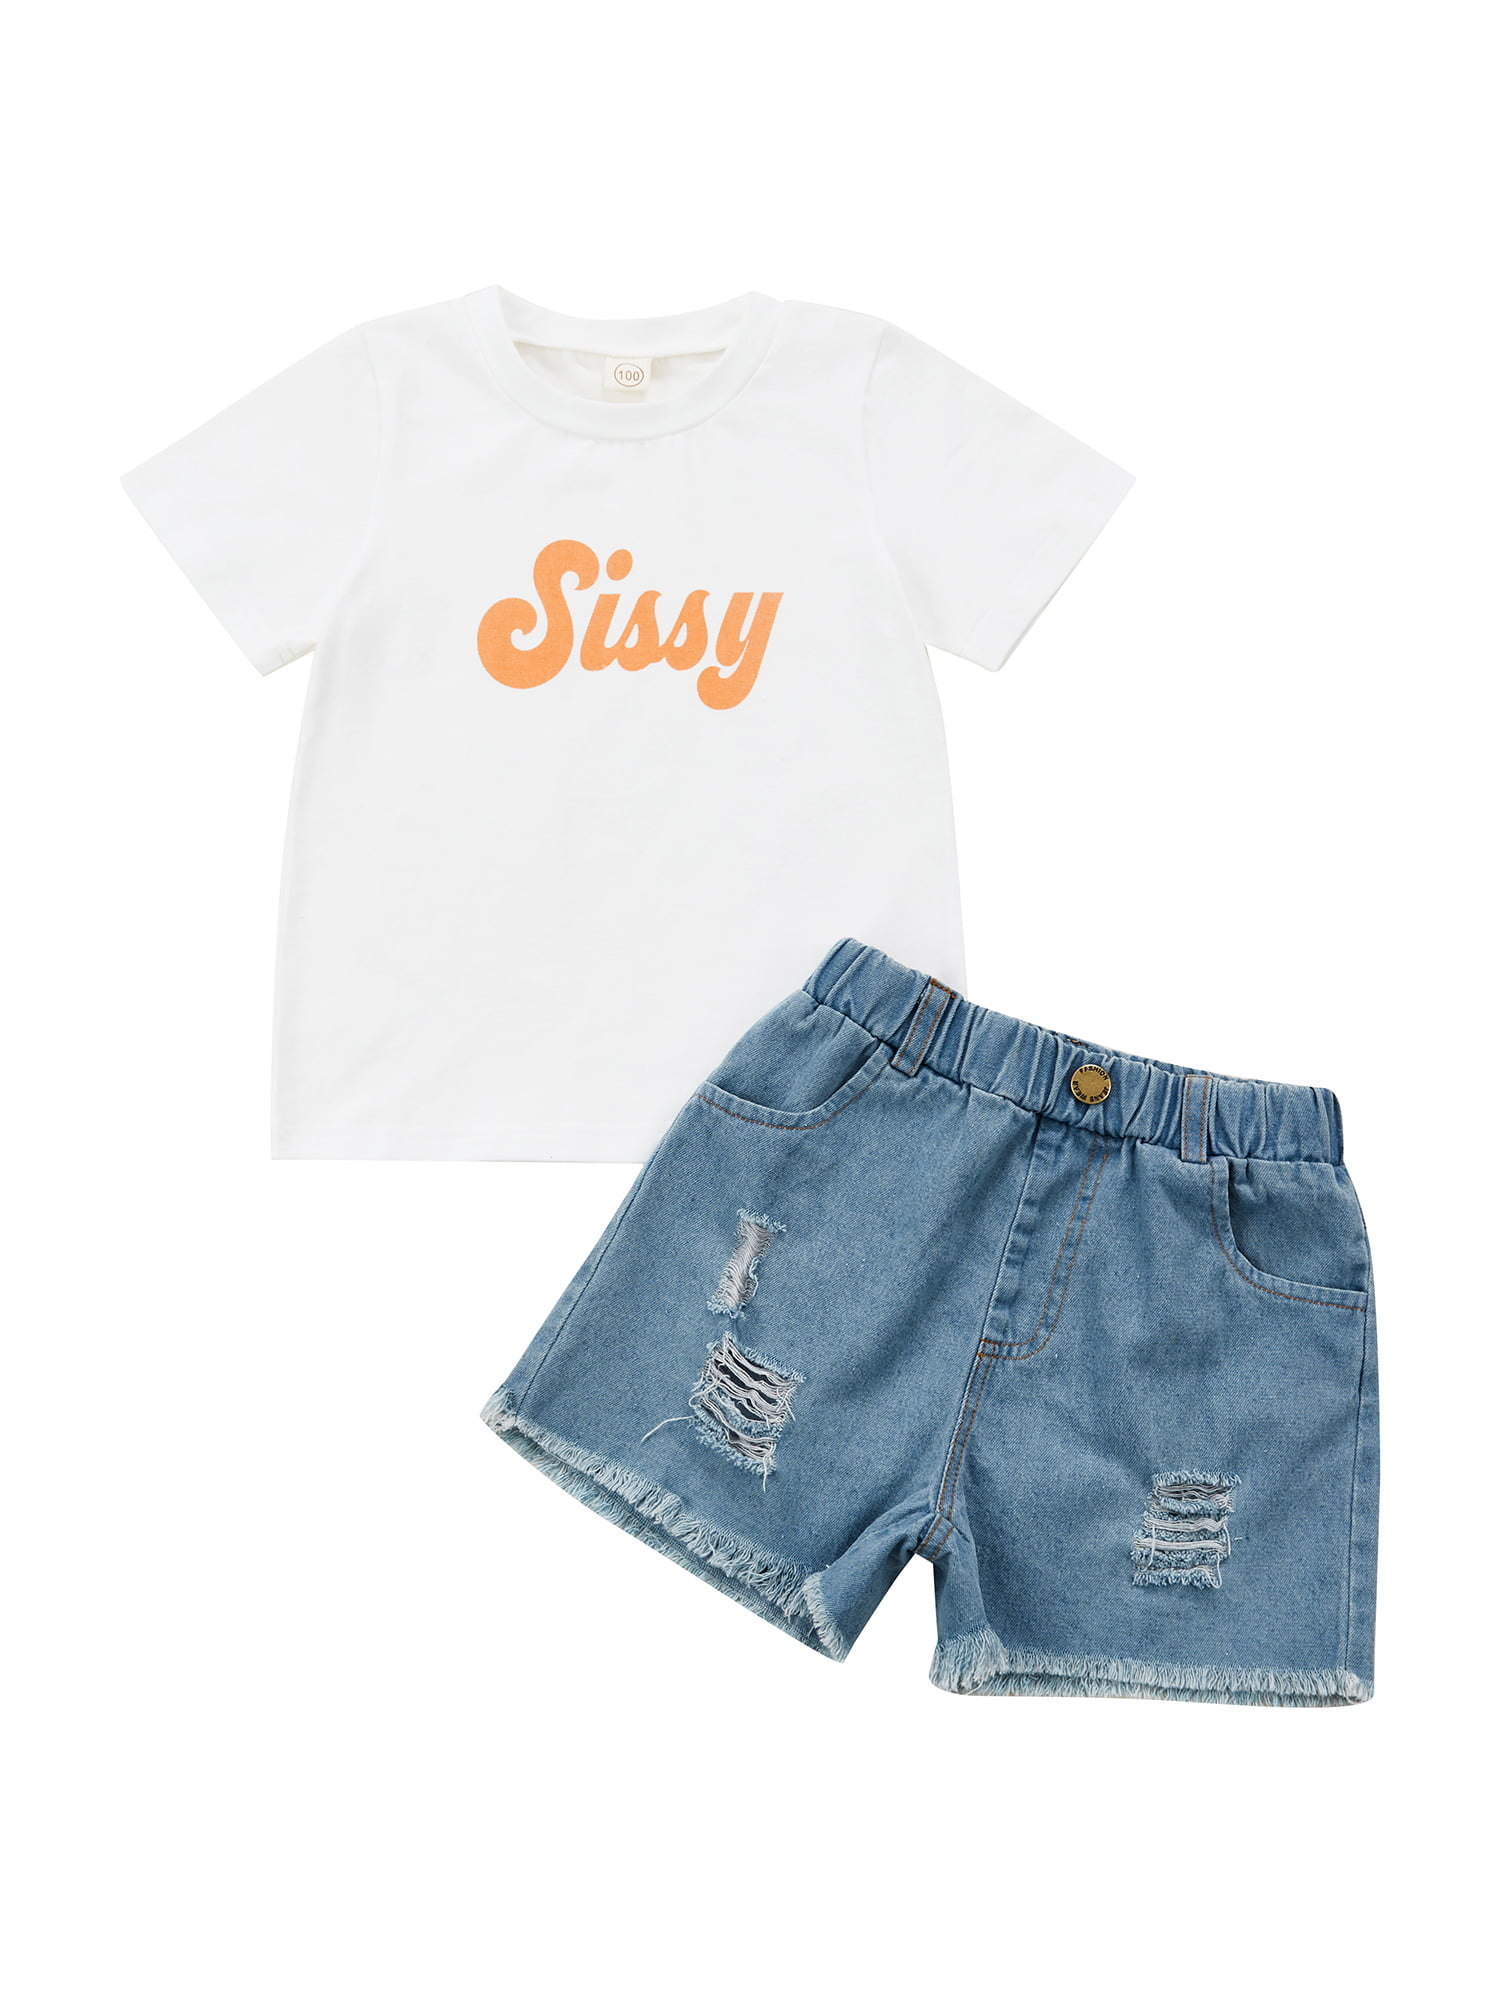 SAYOO Toddler Kids Baby Girl Summer Clothes Sissy Print Short Sleeve T ...